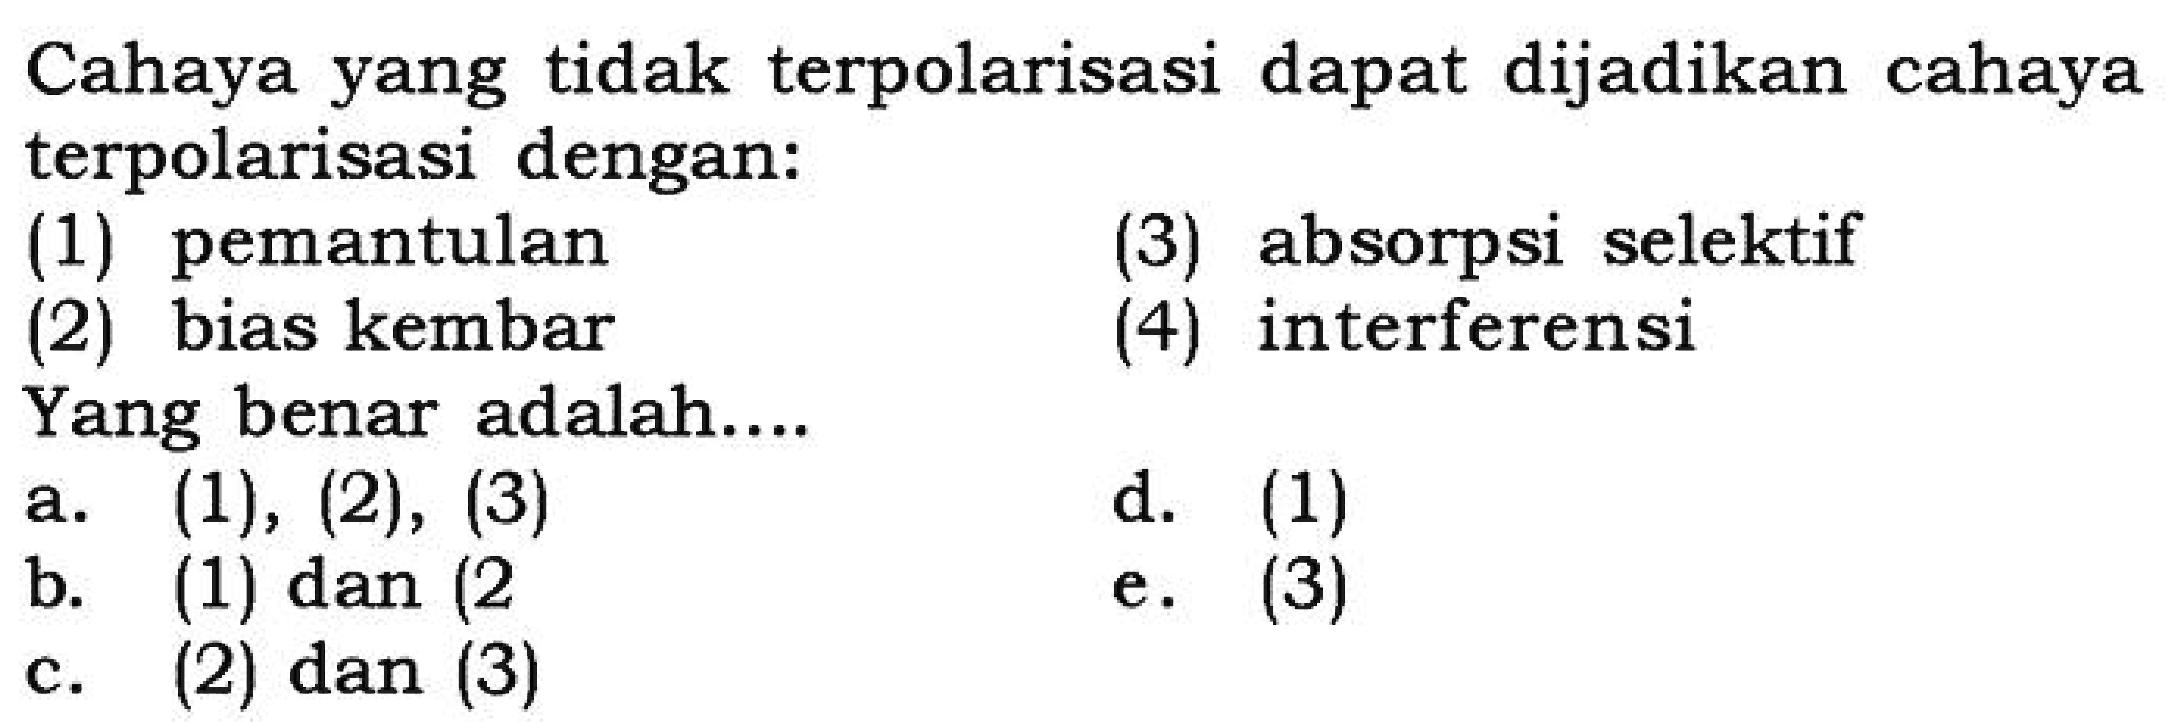 Cahaya yang tidak terpolarisasi dapat dijadikan cahaya terpolarisasi dengan:(1) pemantulan(3) absorpsi selektif(2) bias kembar(4) interferensiYang benar adalah....a. (1),(2),(3)d. (1)b. (1) dan (2)e. (3)c. (2) dan (3)